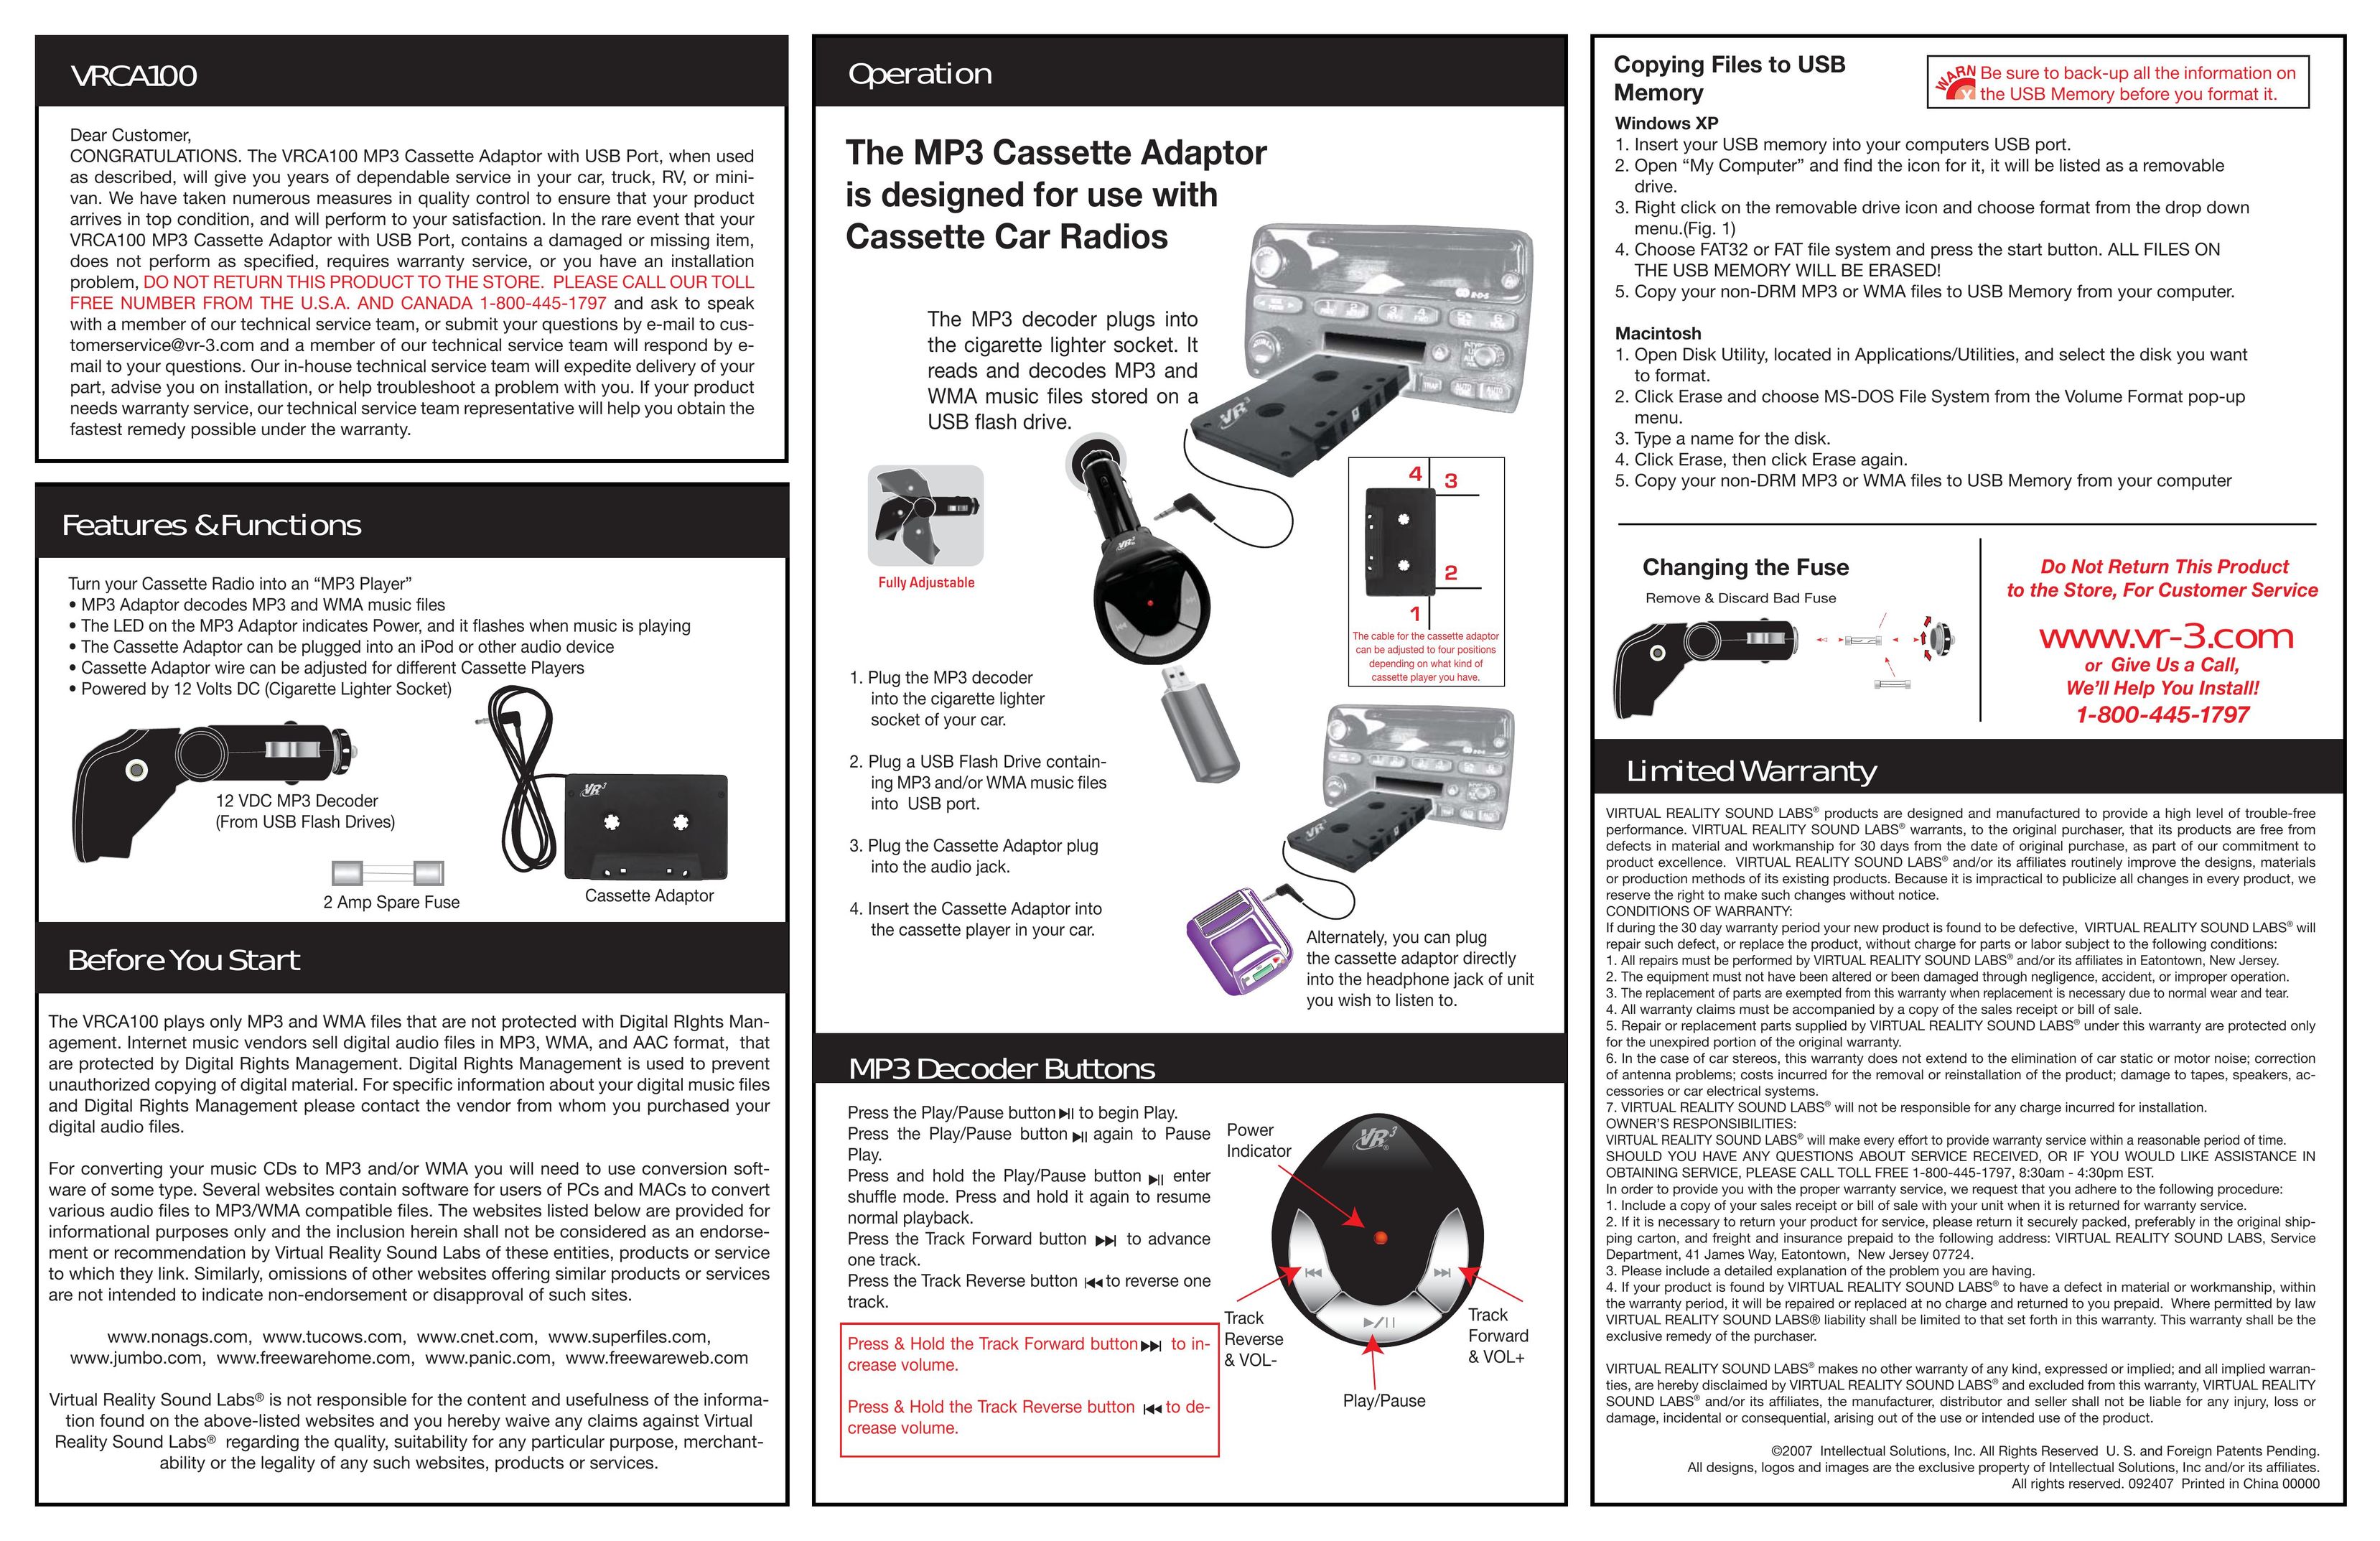 Roadmaster VRCA100 MP3 Player User Manual